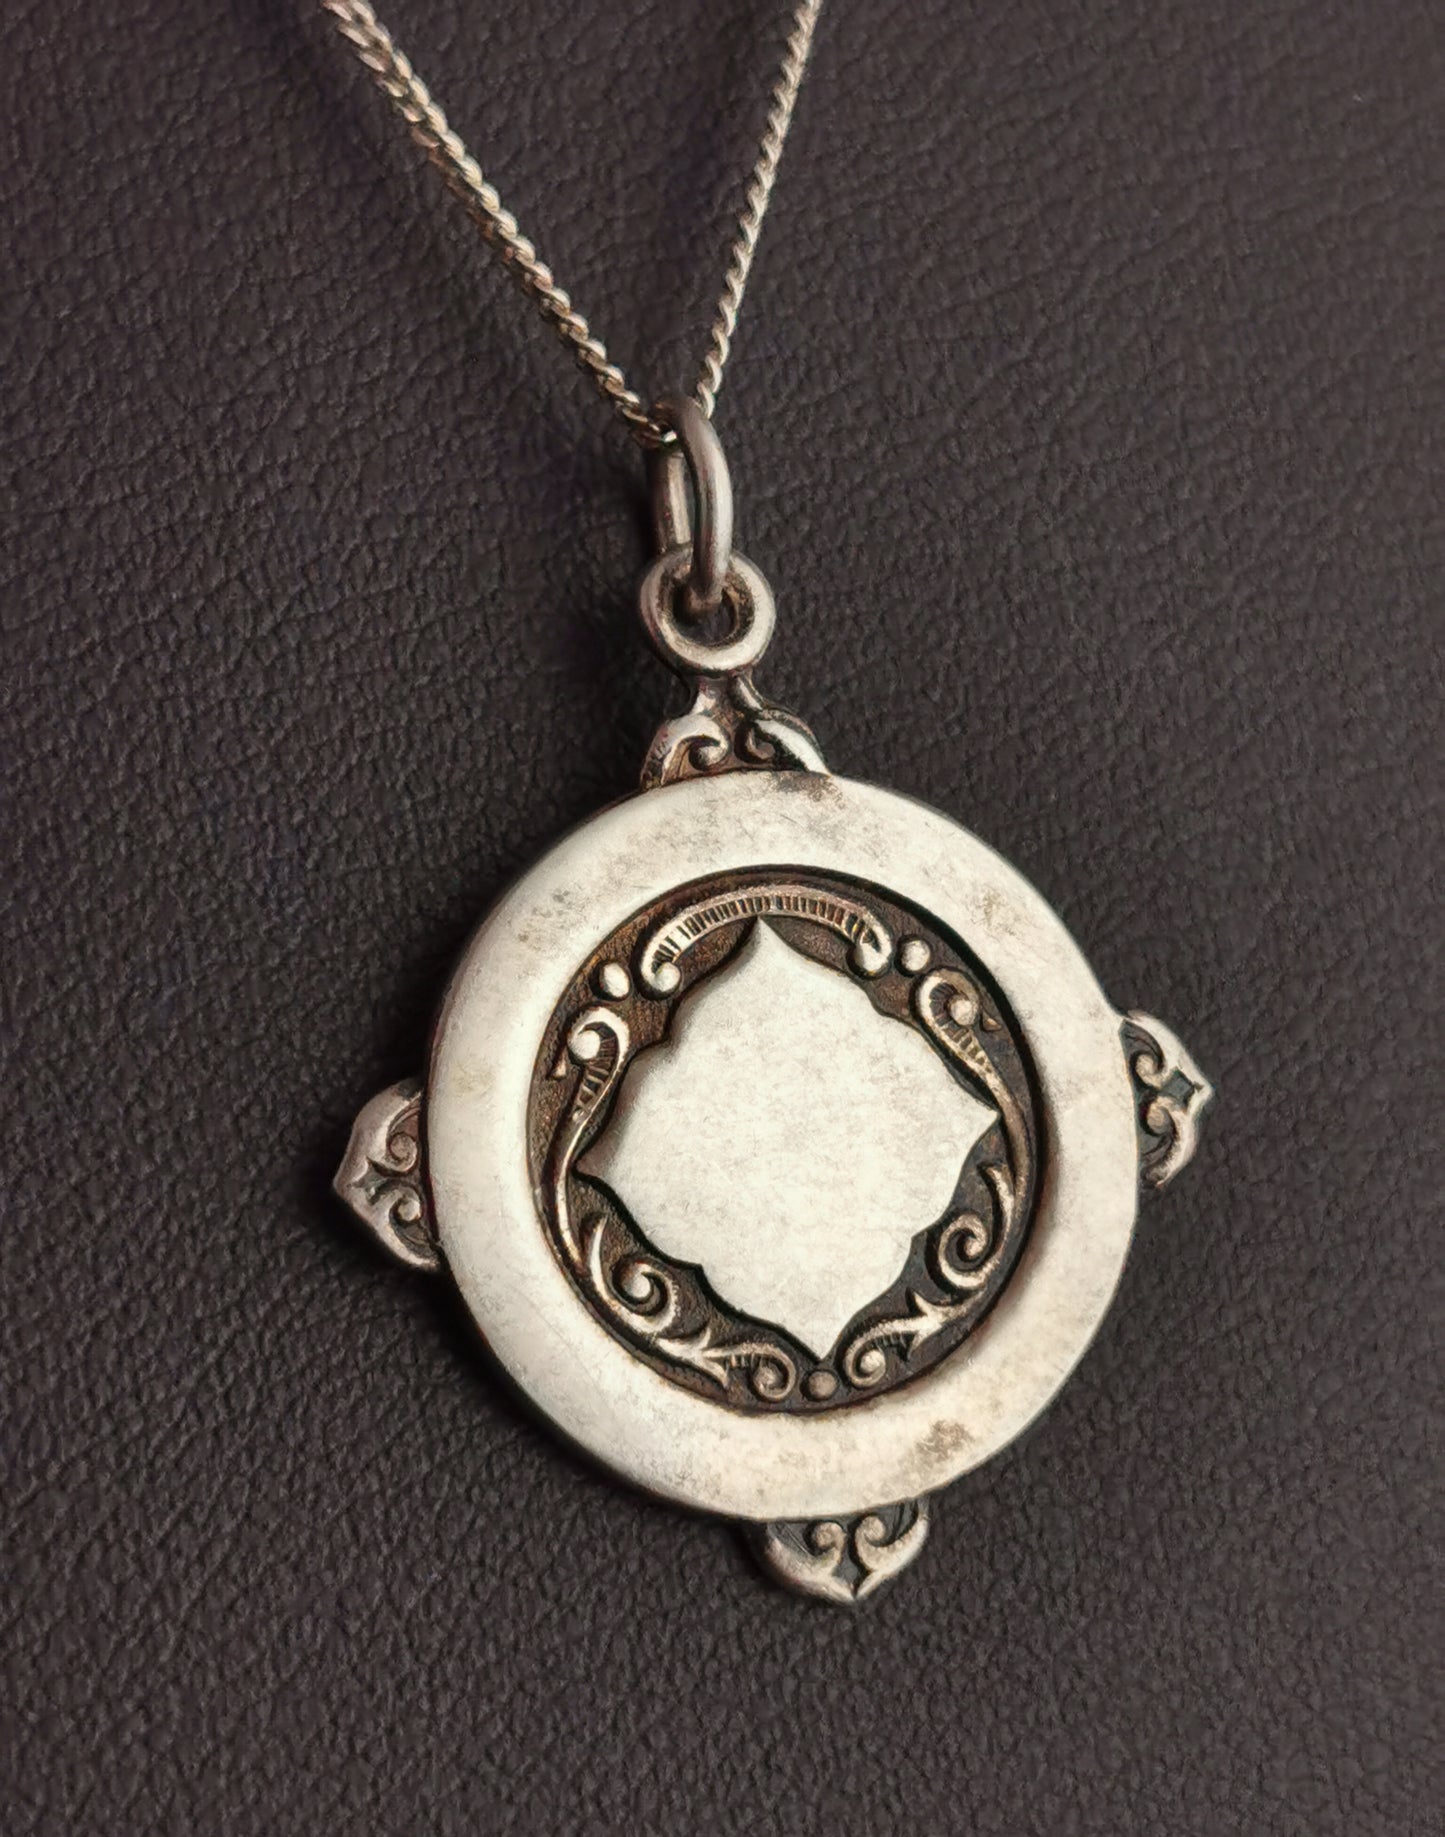 Vintage sterling silver fob pendant, necklace